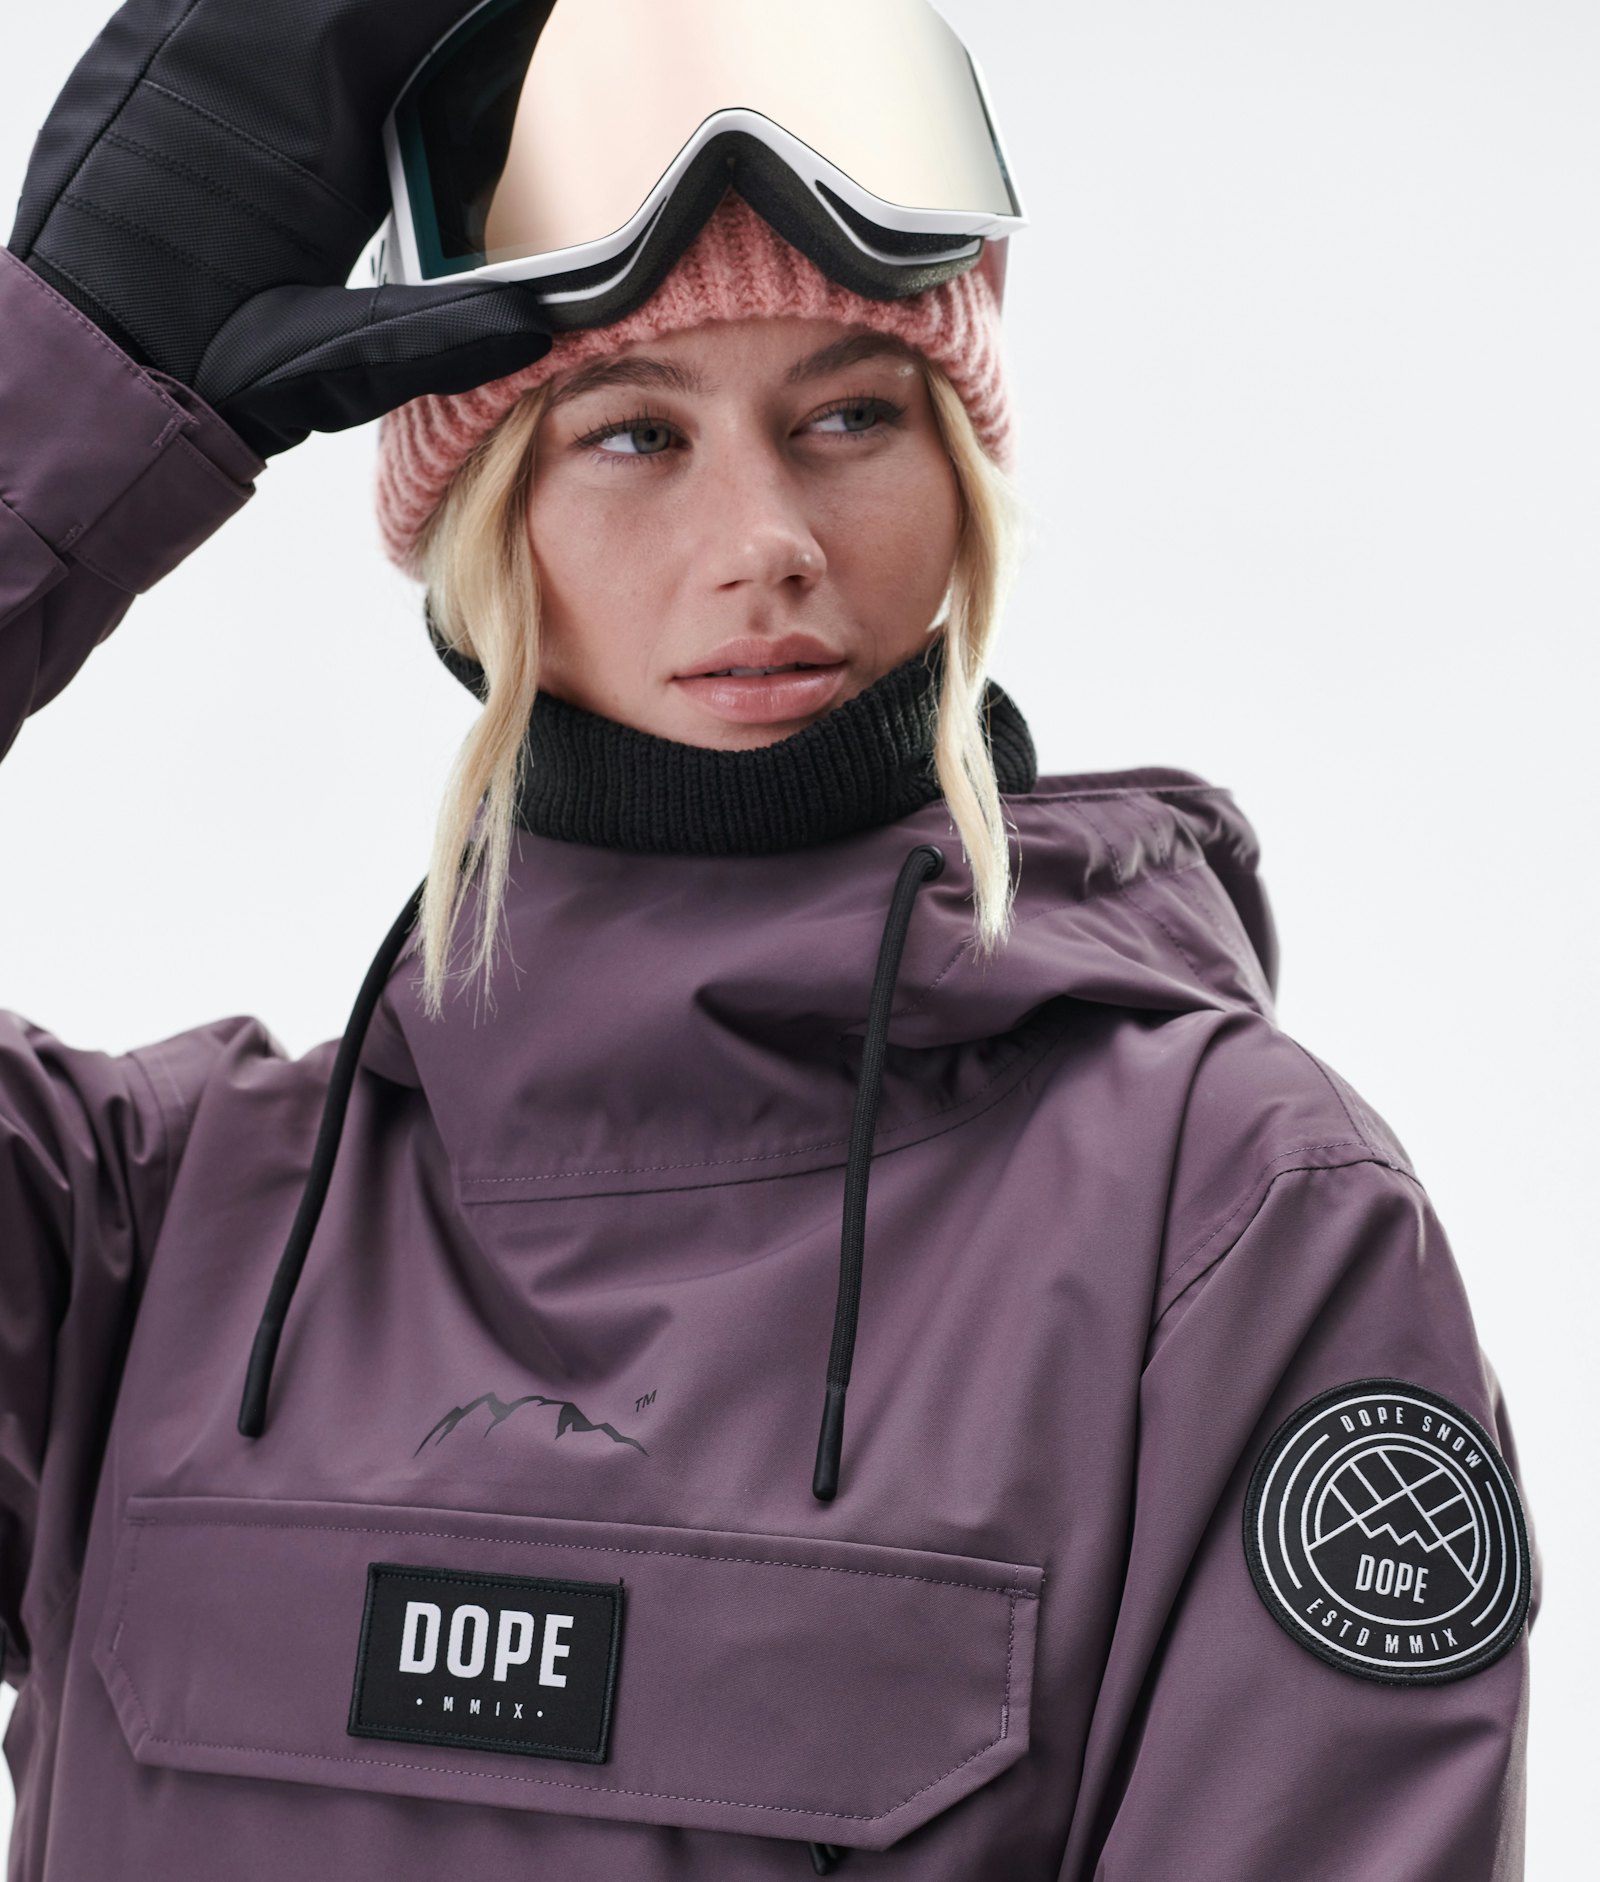 Dope Blizzard W 2020 Snowboard jas Dames Faded Grape